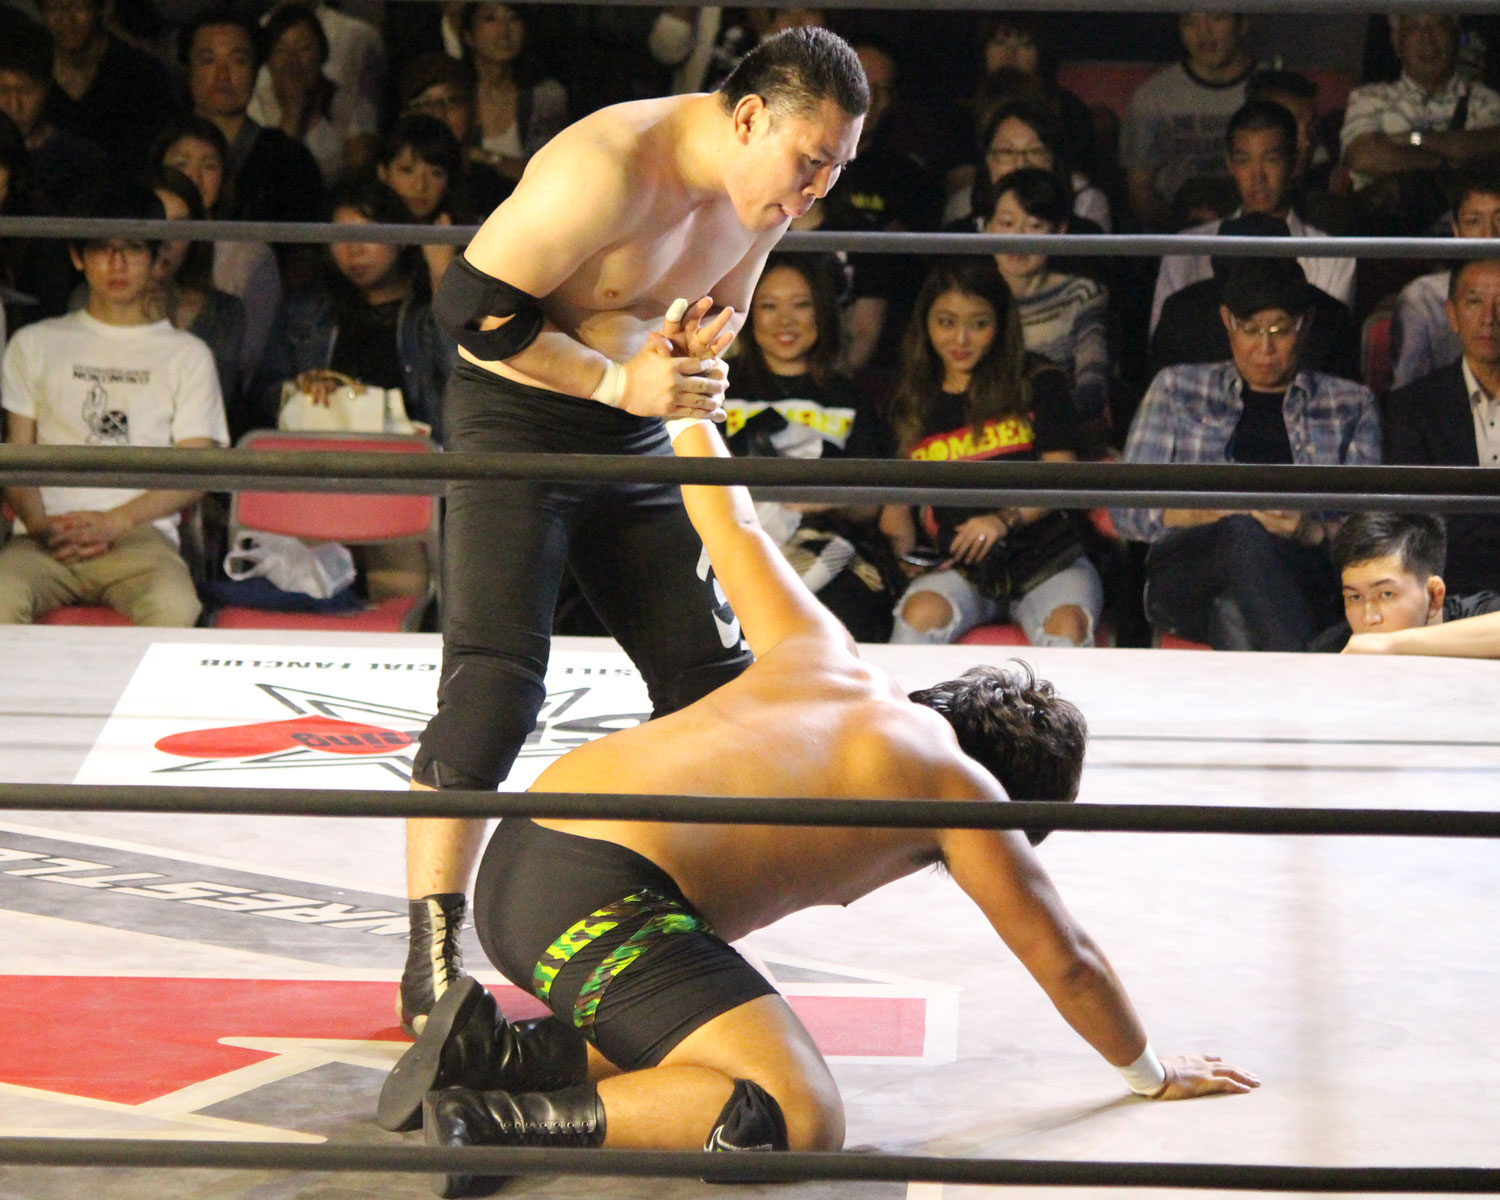 Wrestle 1芦野祥太郎 征矢学からギブアップを奪い返り討ちに 次期挑戦者にはペガソが名乗り 週刊ファイト